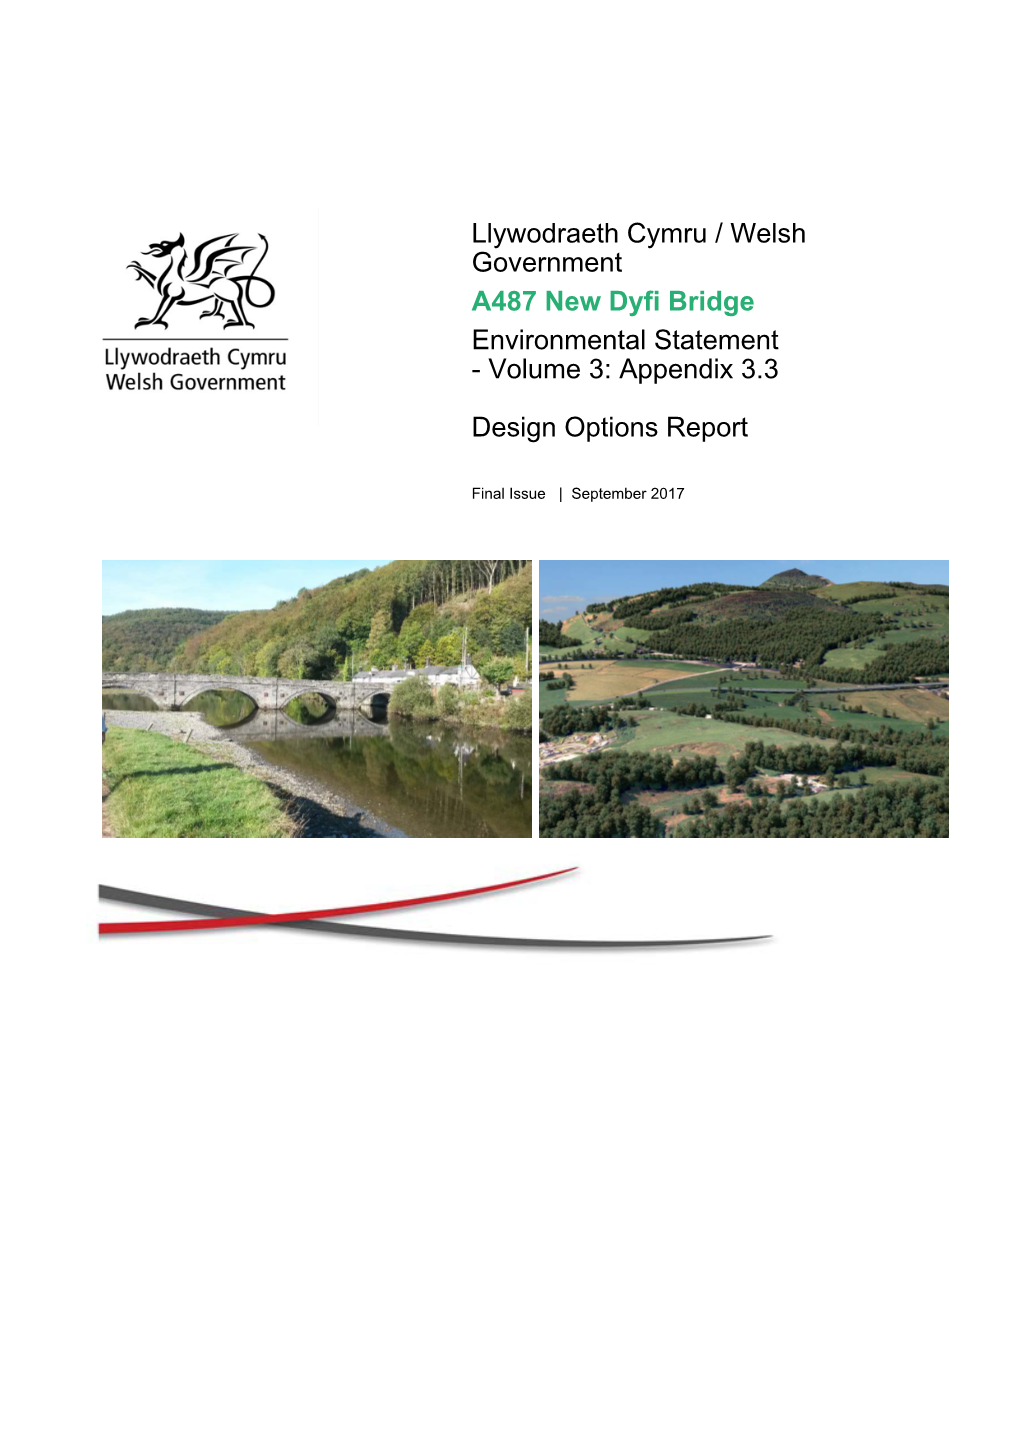 Llywodraeth Cymru / Welsh Government A487 New Dyfi Bridge Environmental Statement - Volume 3: Appendix 3.3